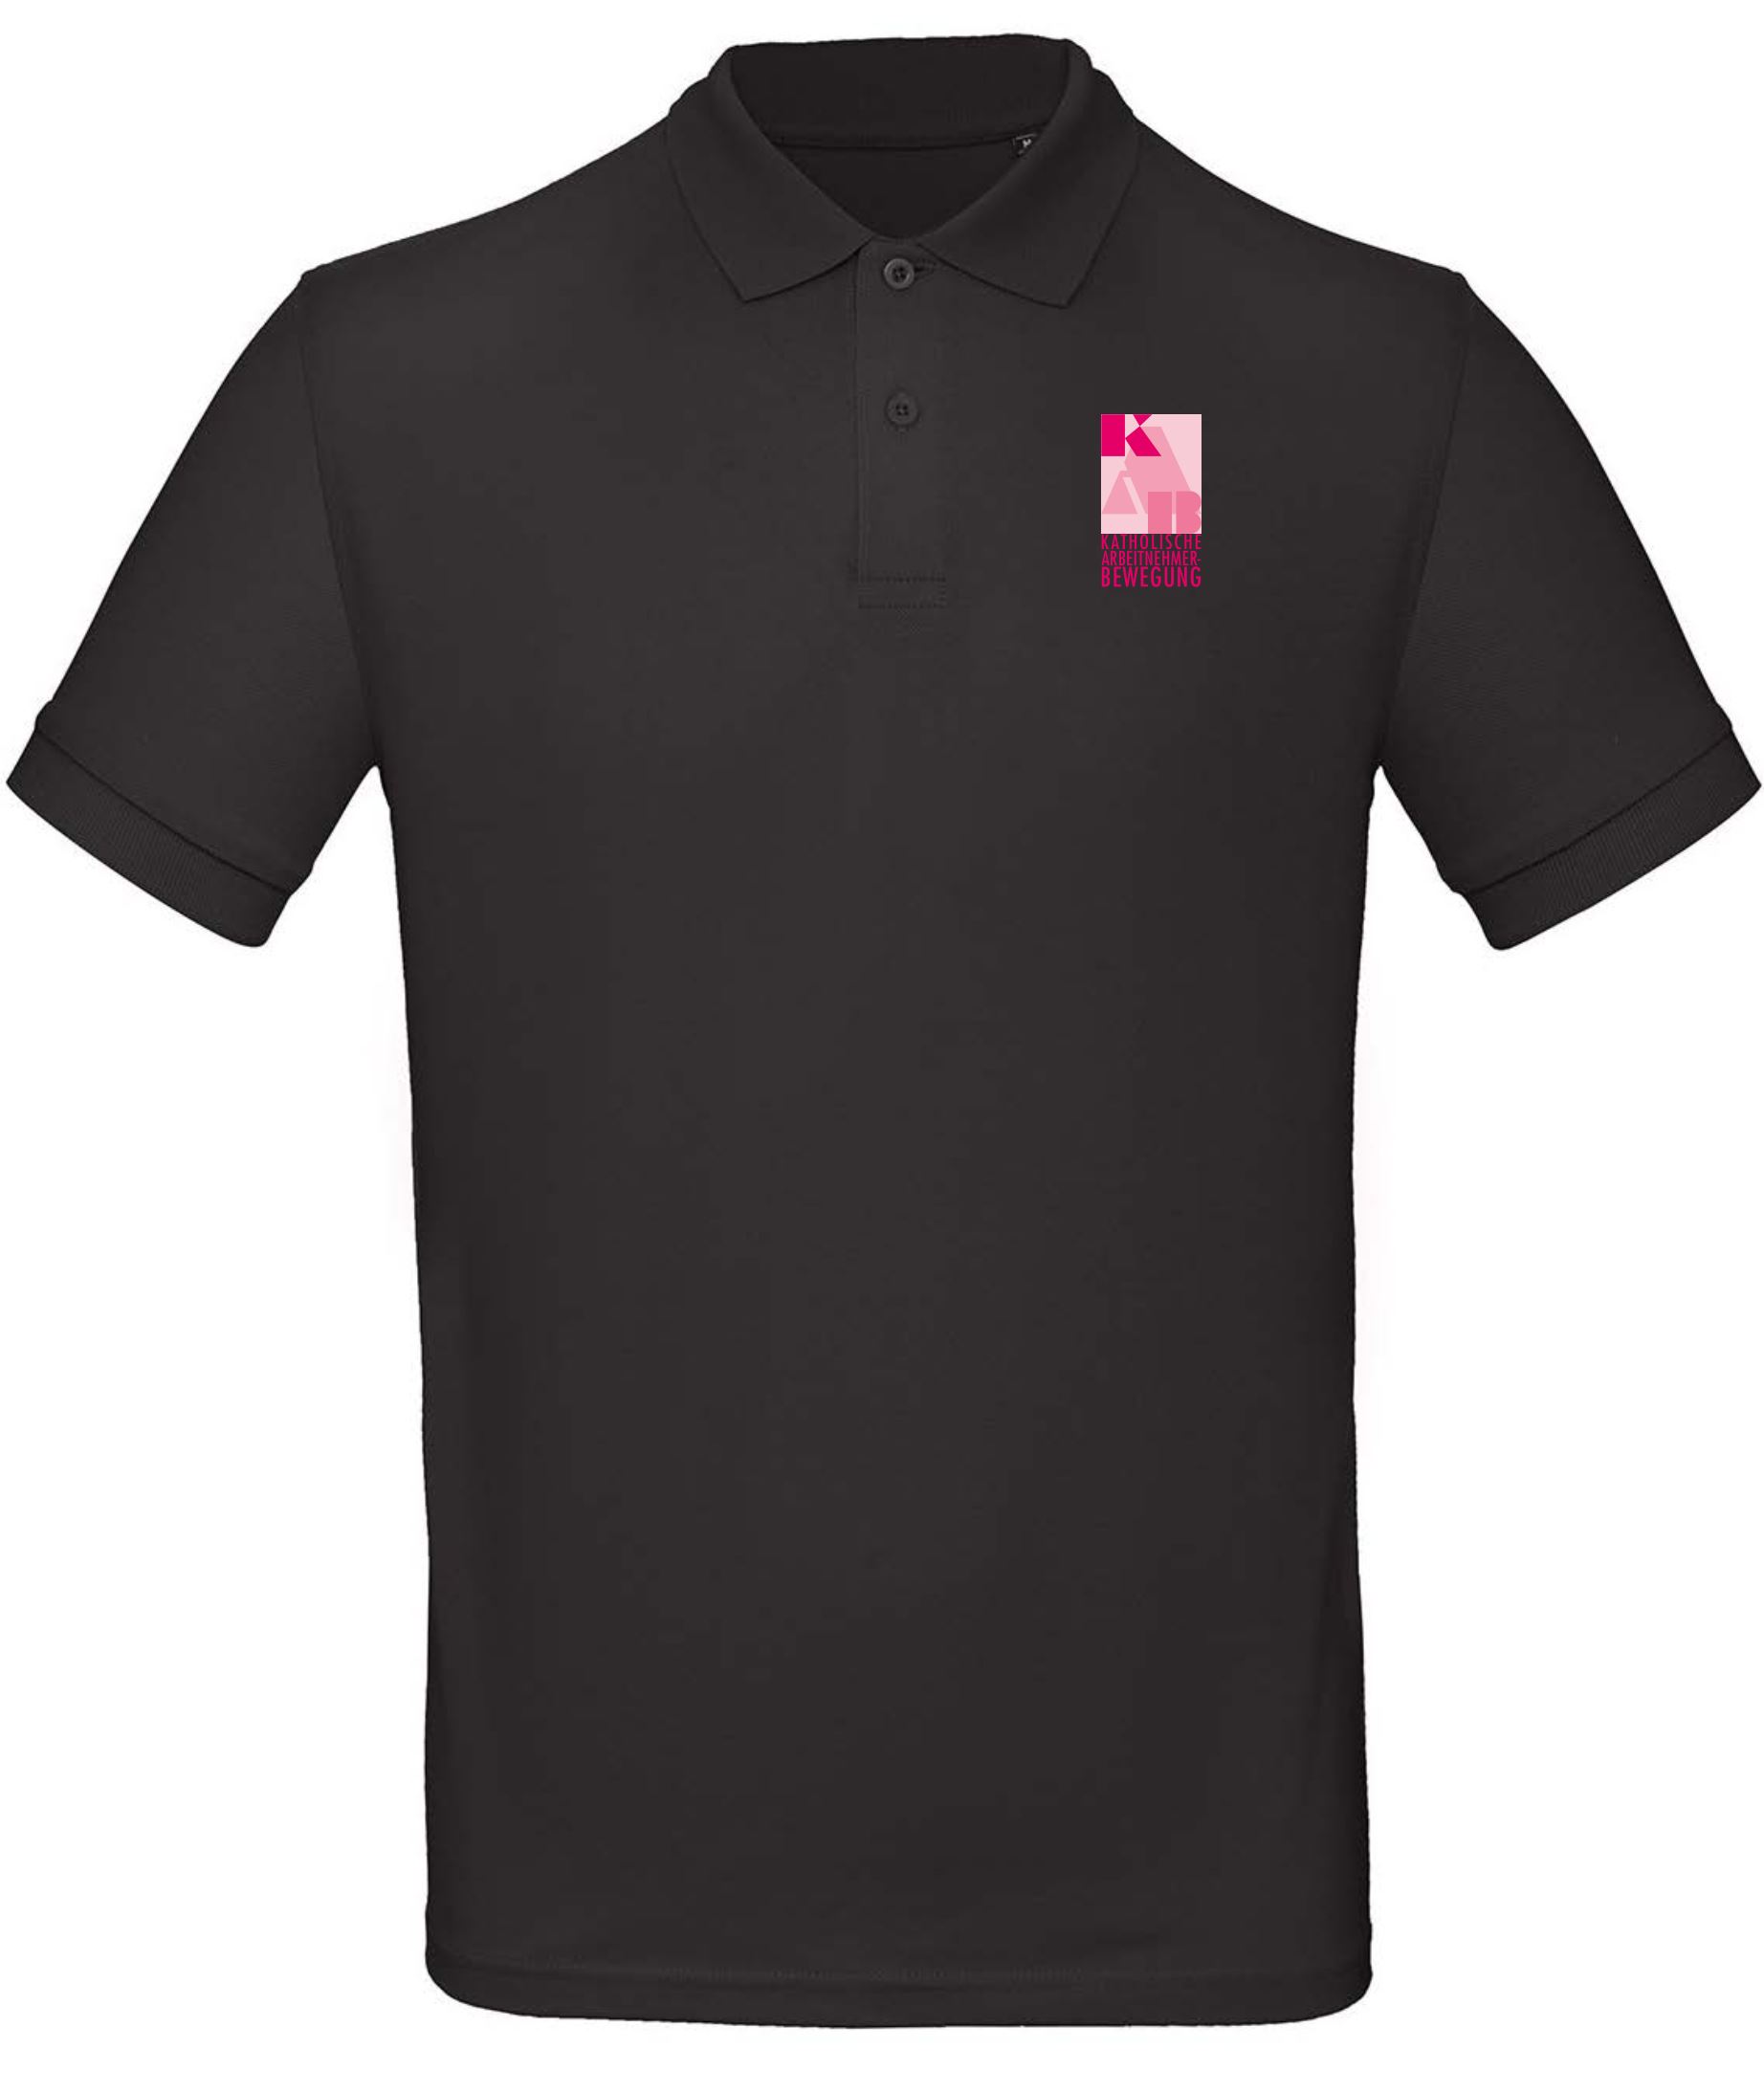 KAB Kampagnen-Kurzarm-Poloshirt schwarz unisex Gr. XXL